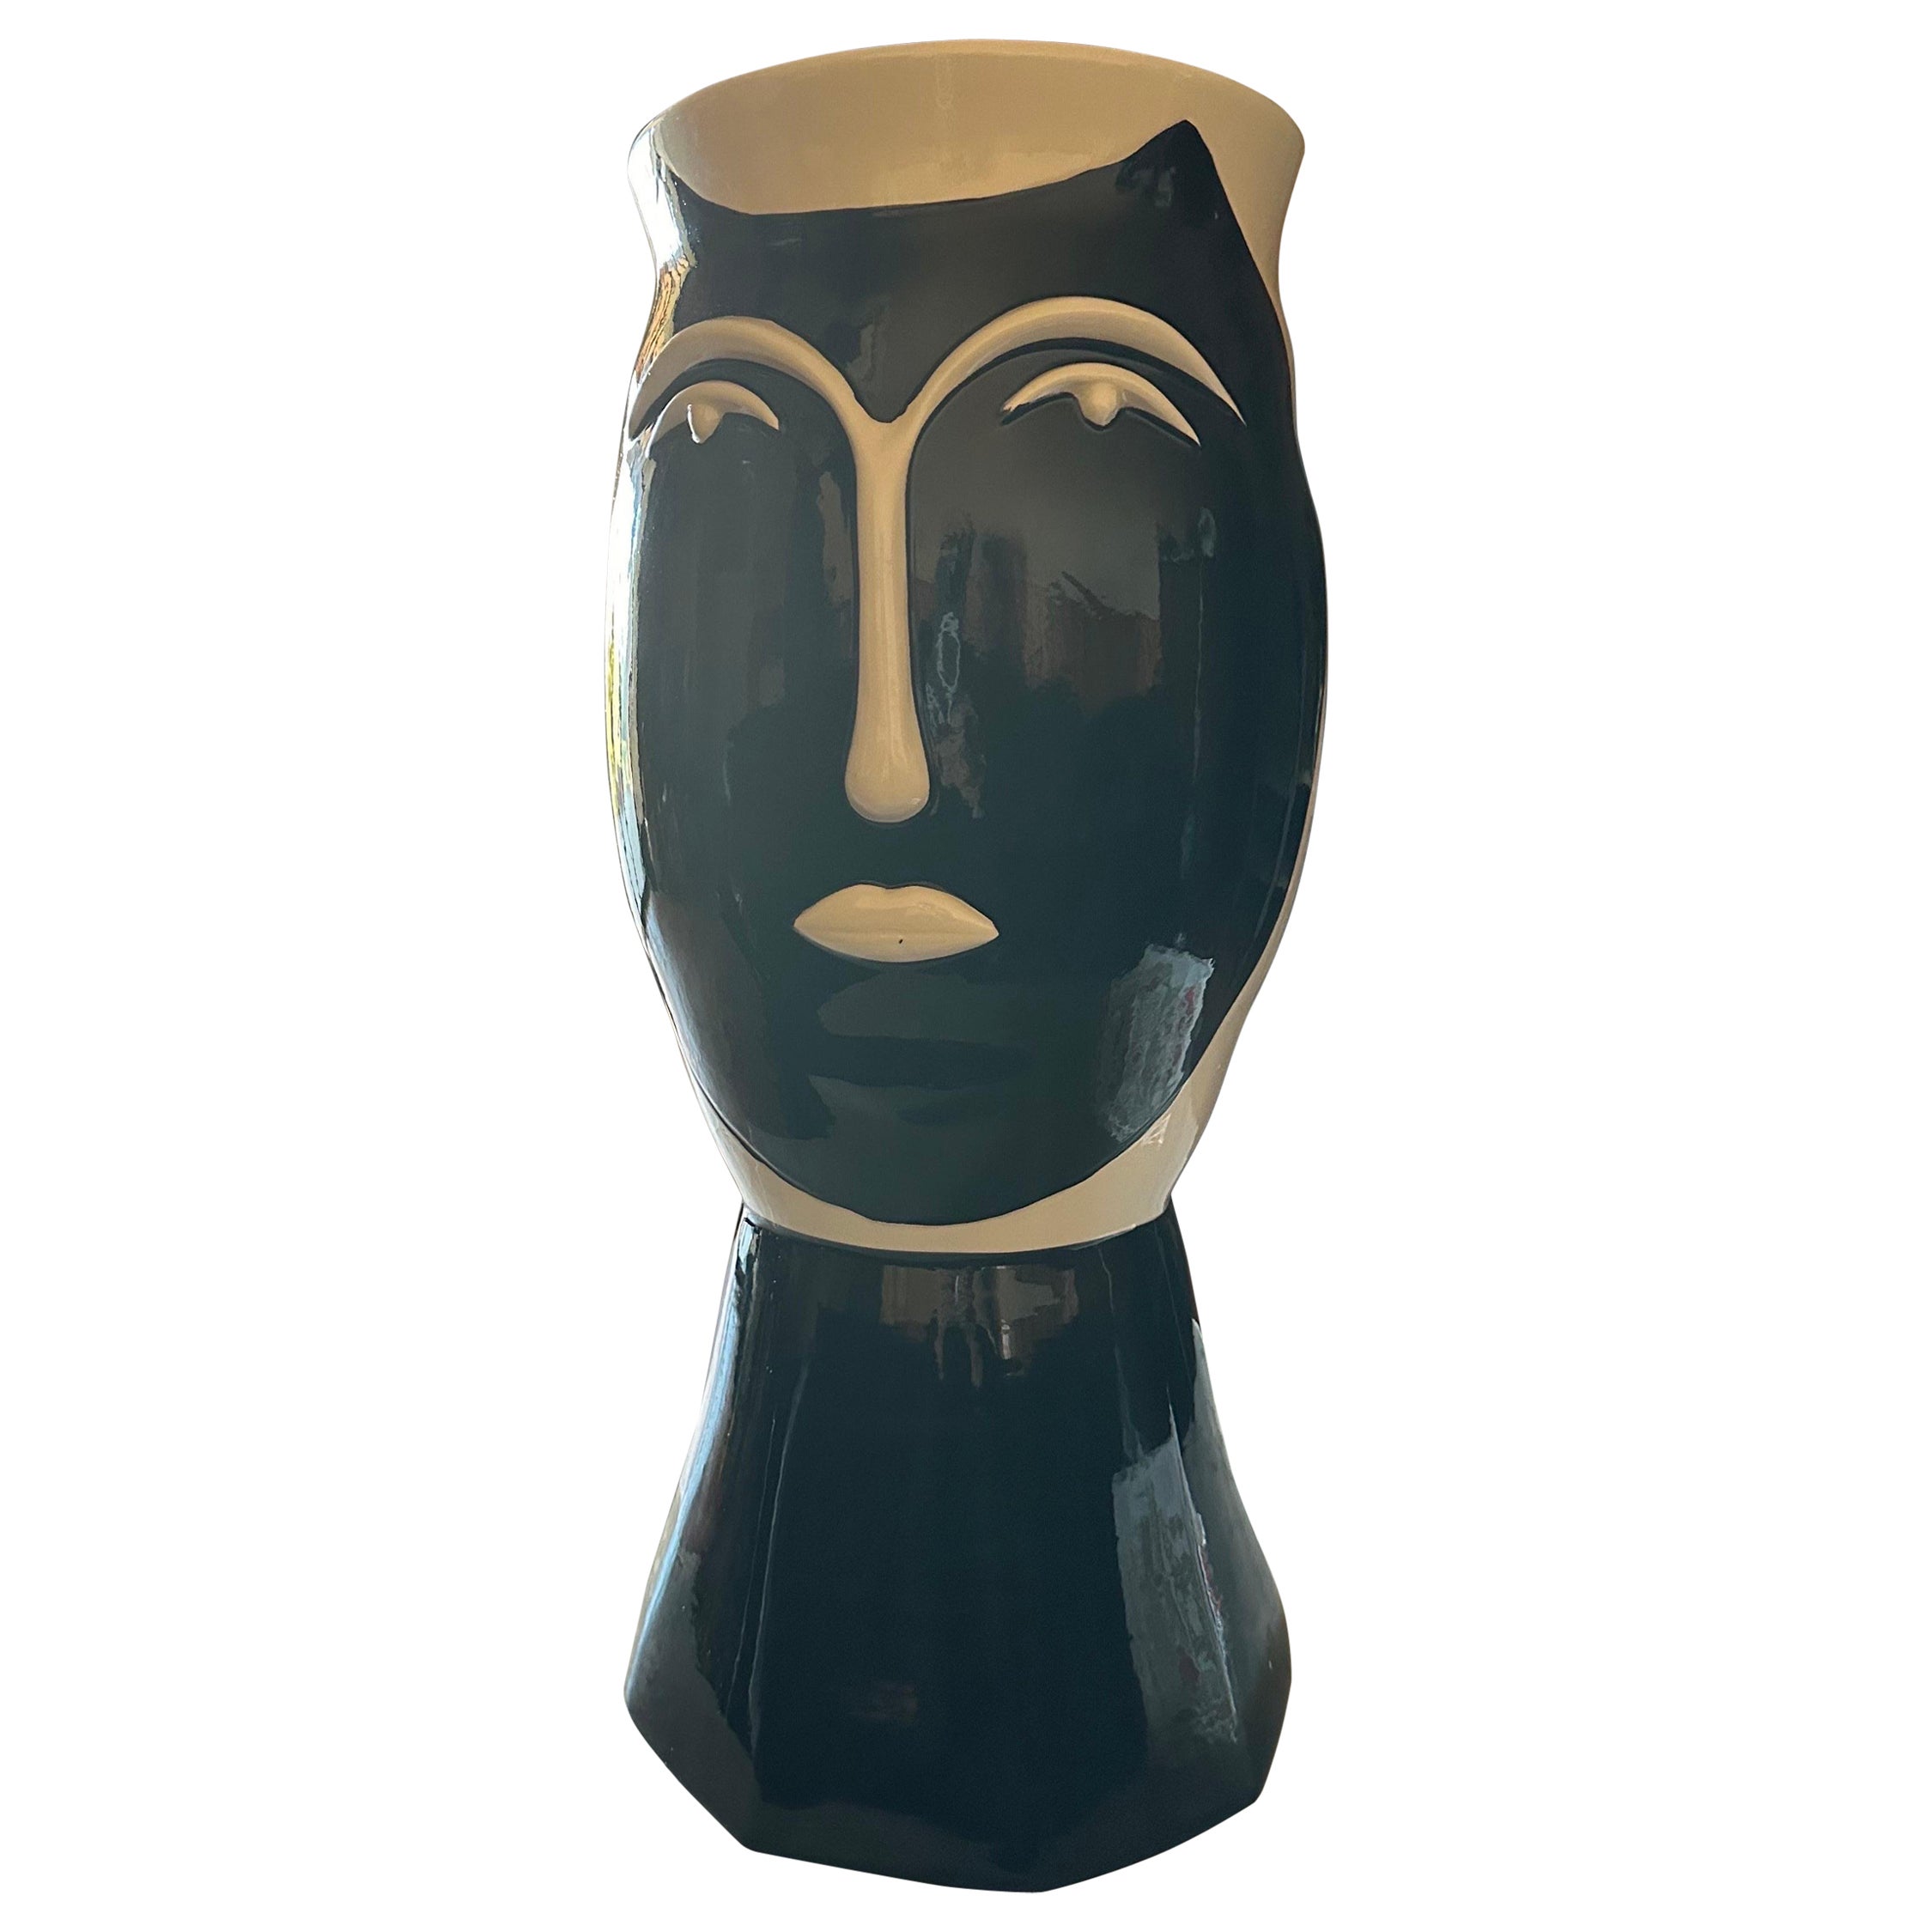 Impressive Italian ceramic vase